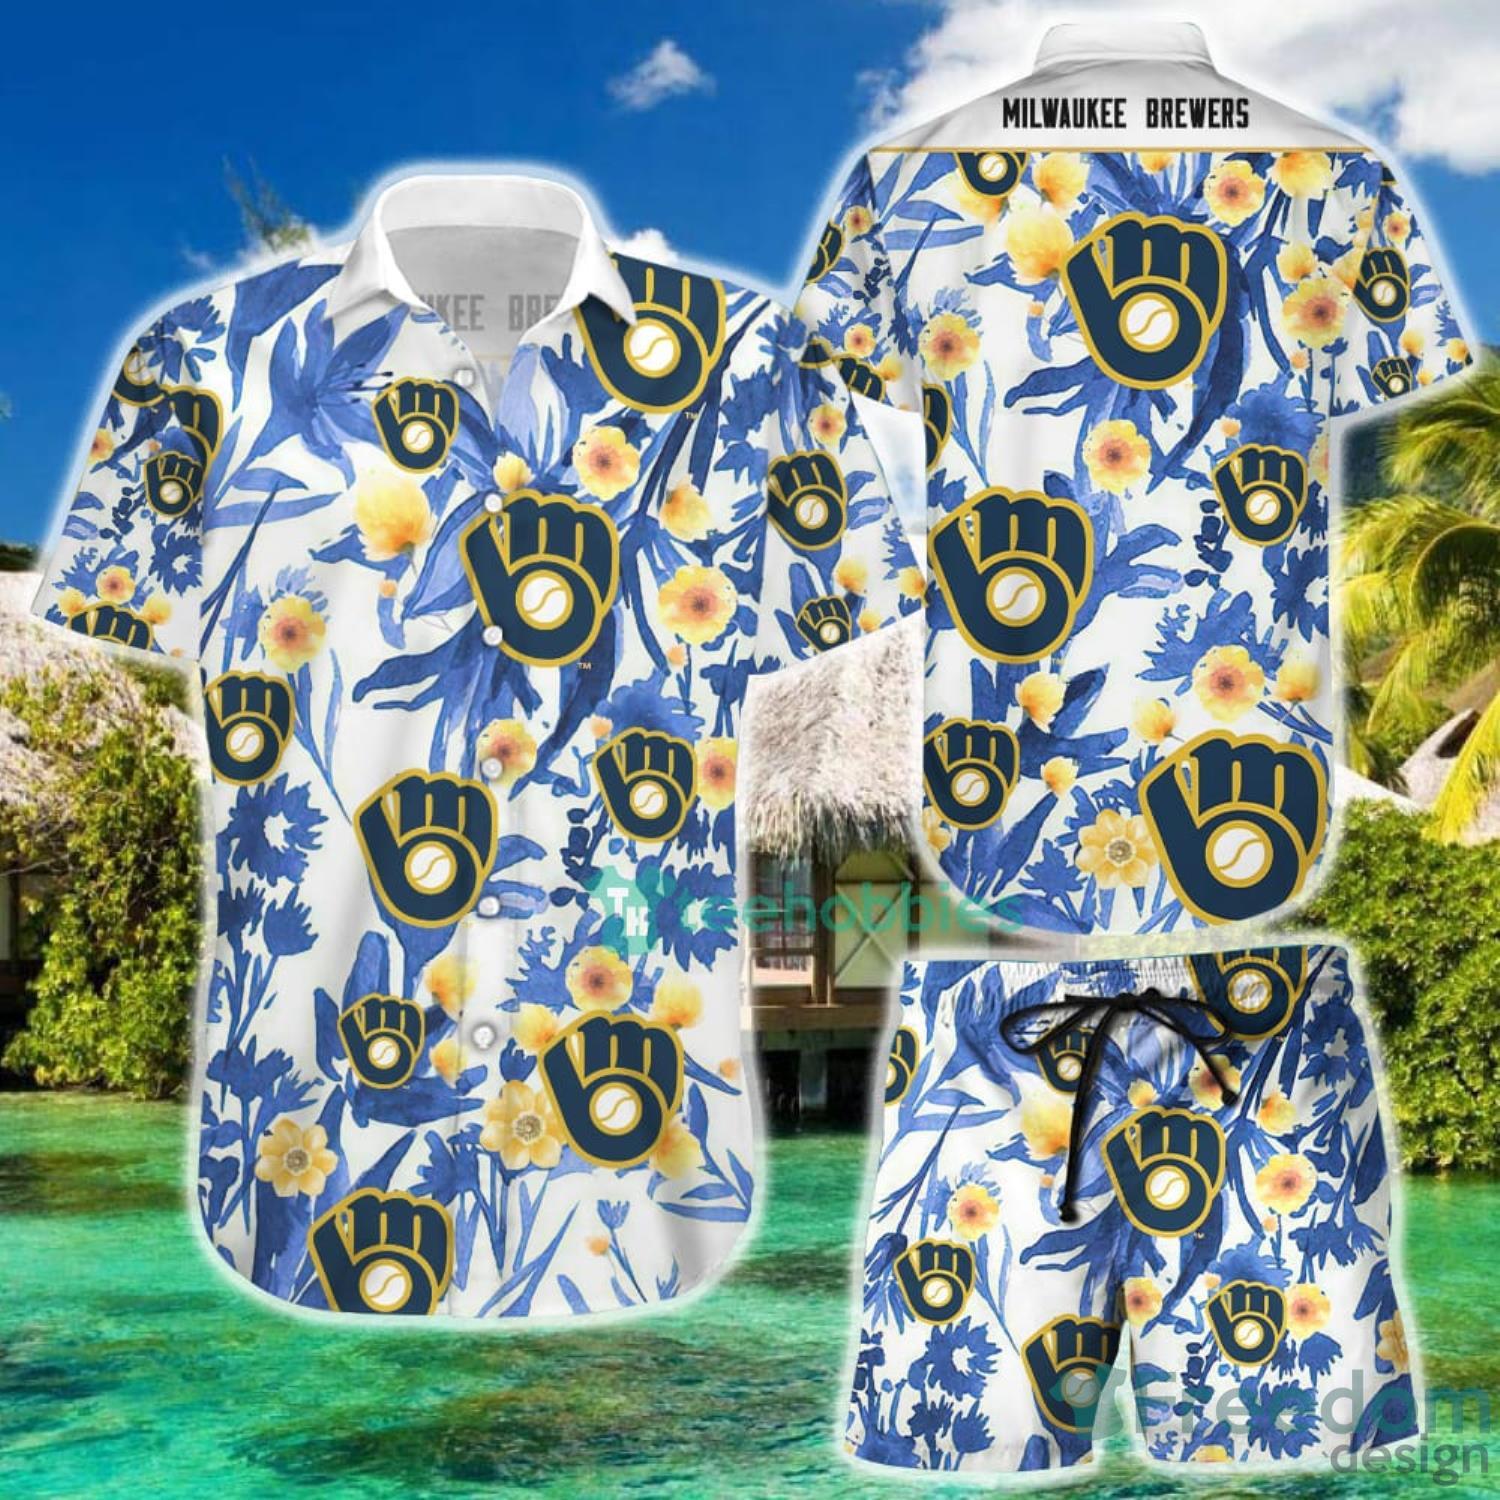 Milwaukee Brewers Hawaiian Shirt And Short For Fans - Freedomdesign